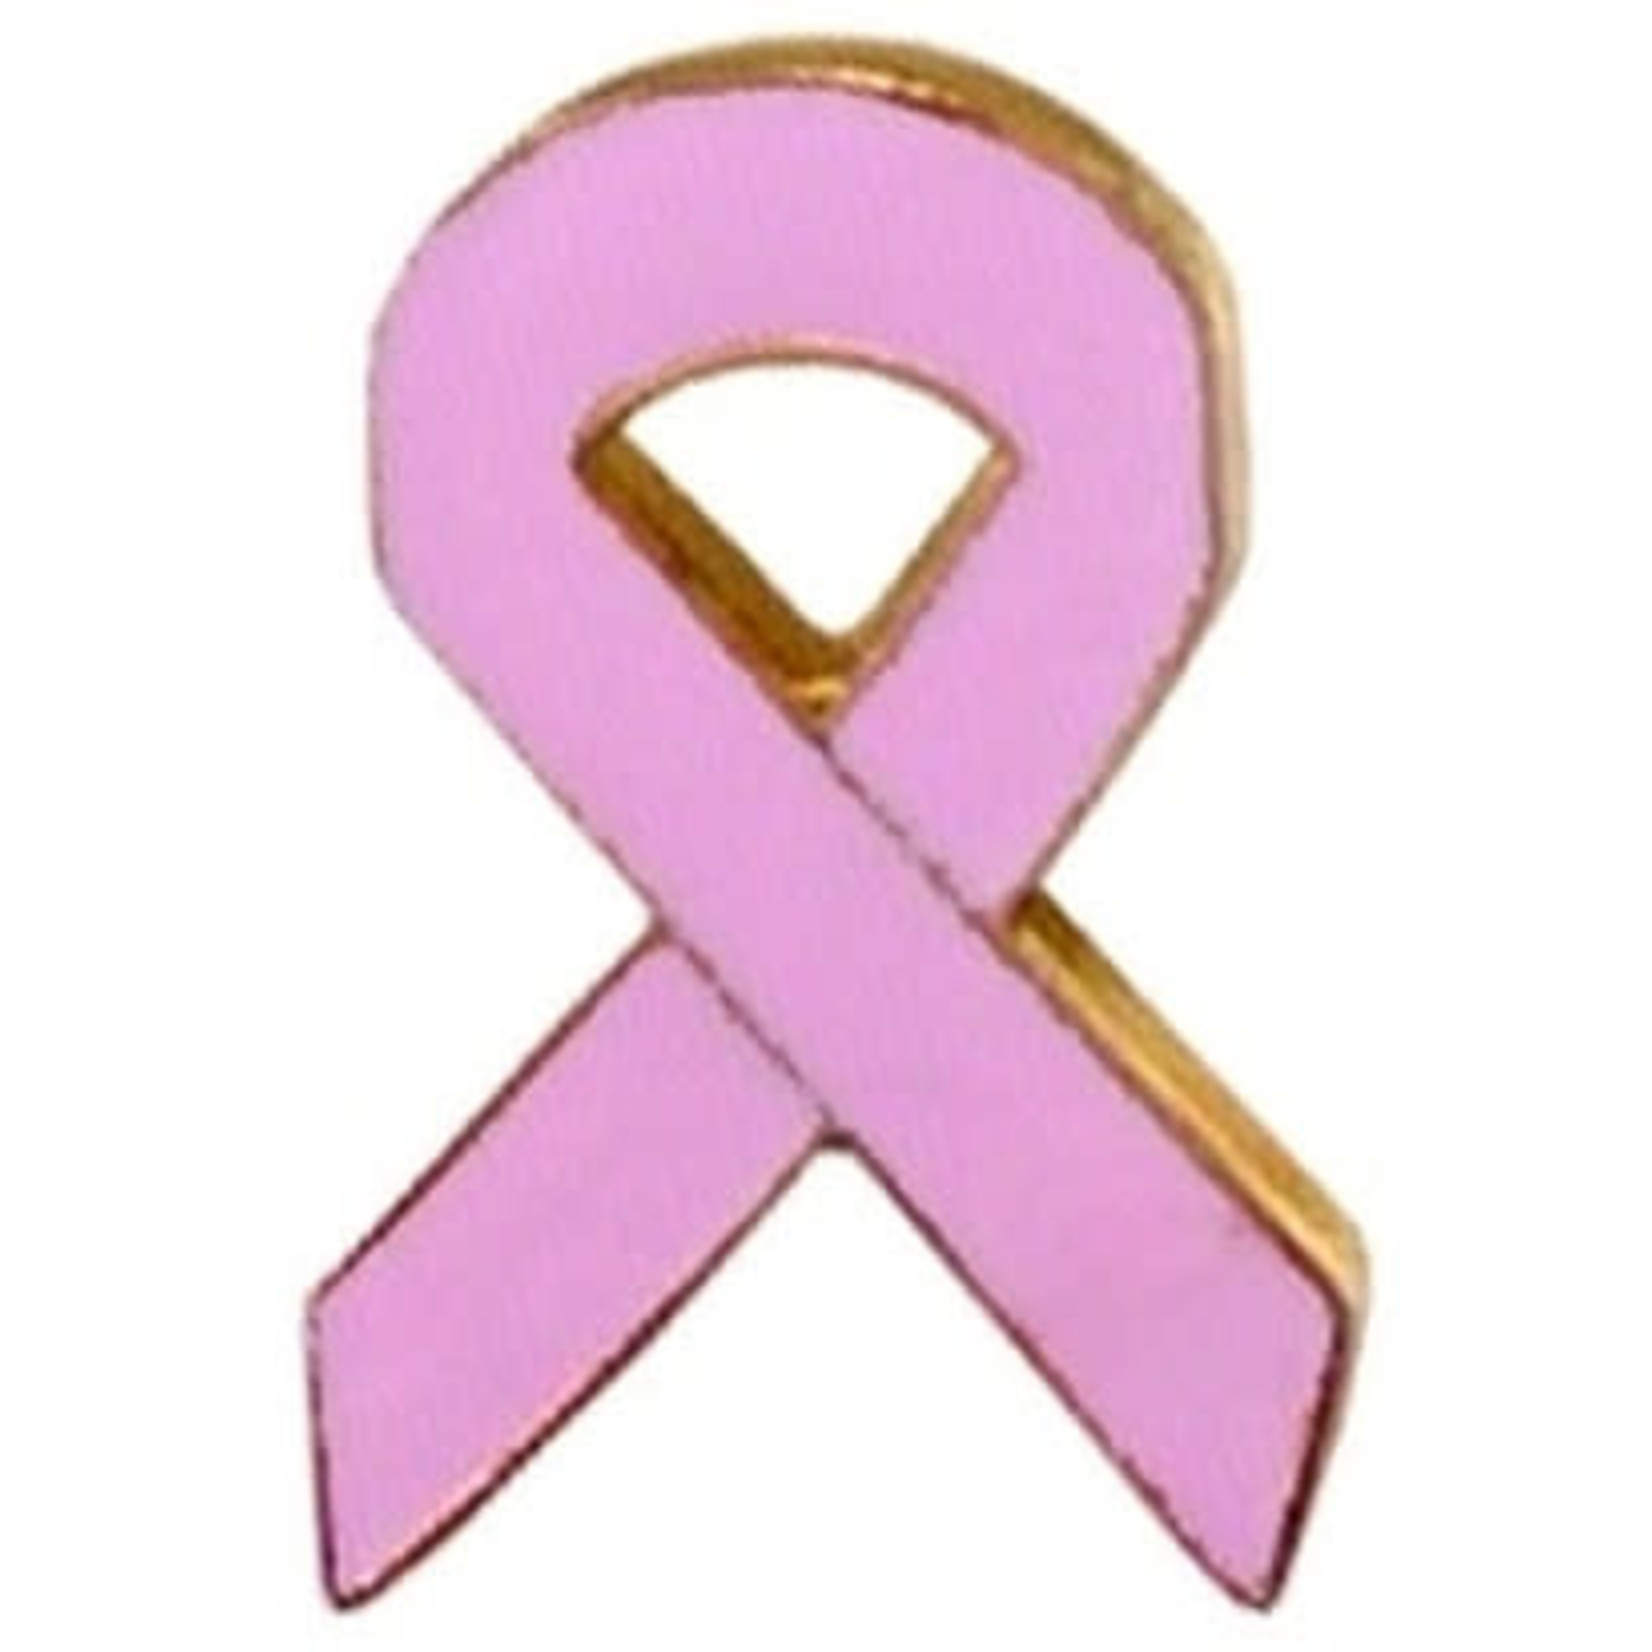 Hero's Pride Pink Ribbon Pin